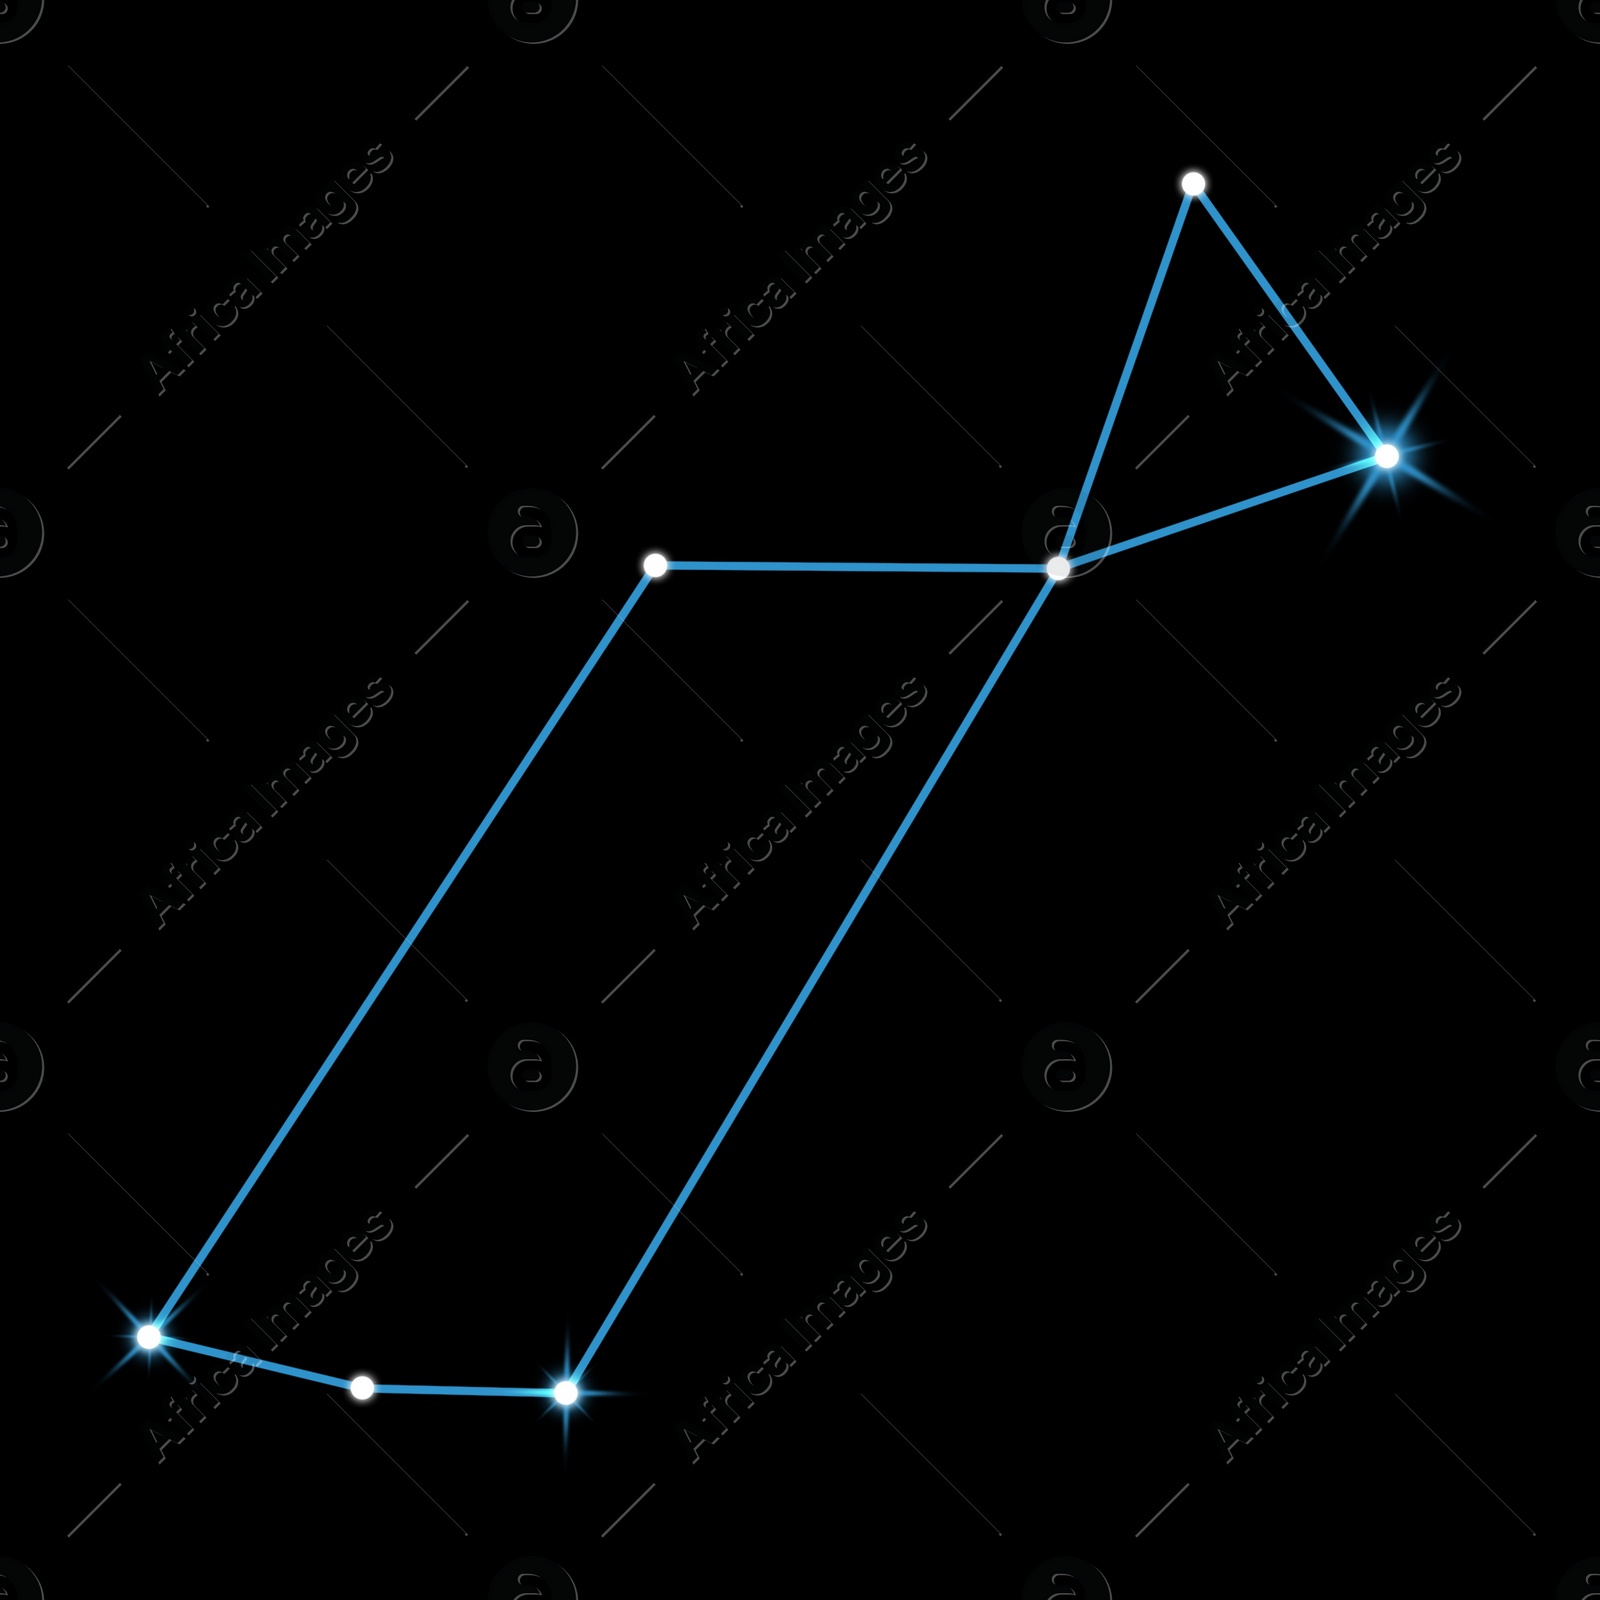 Image of Lyra constellation. Stick figure pattern on black background